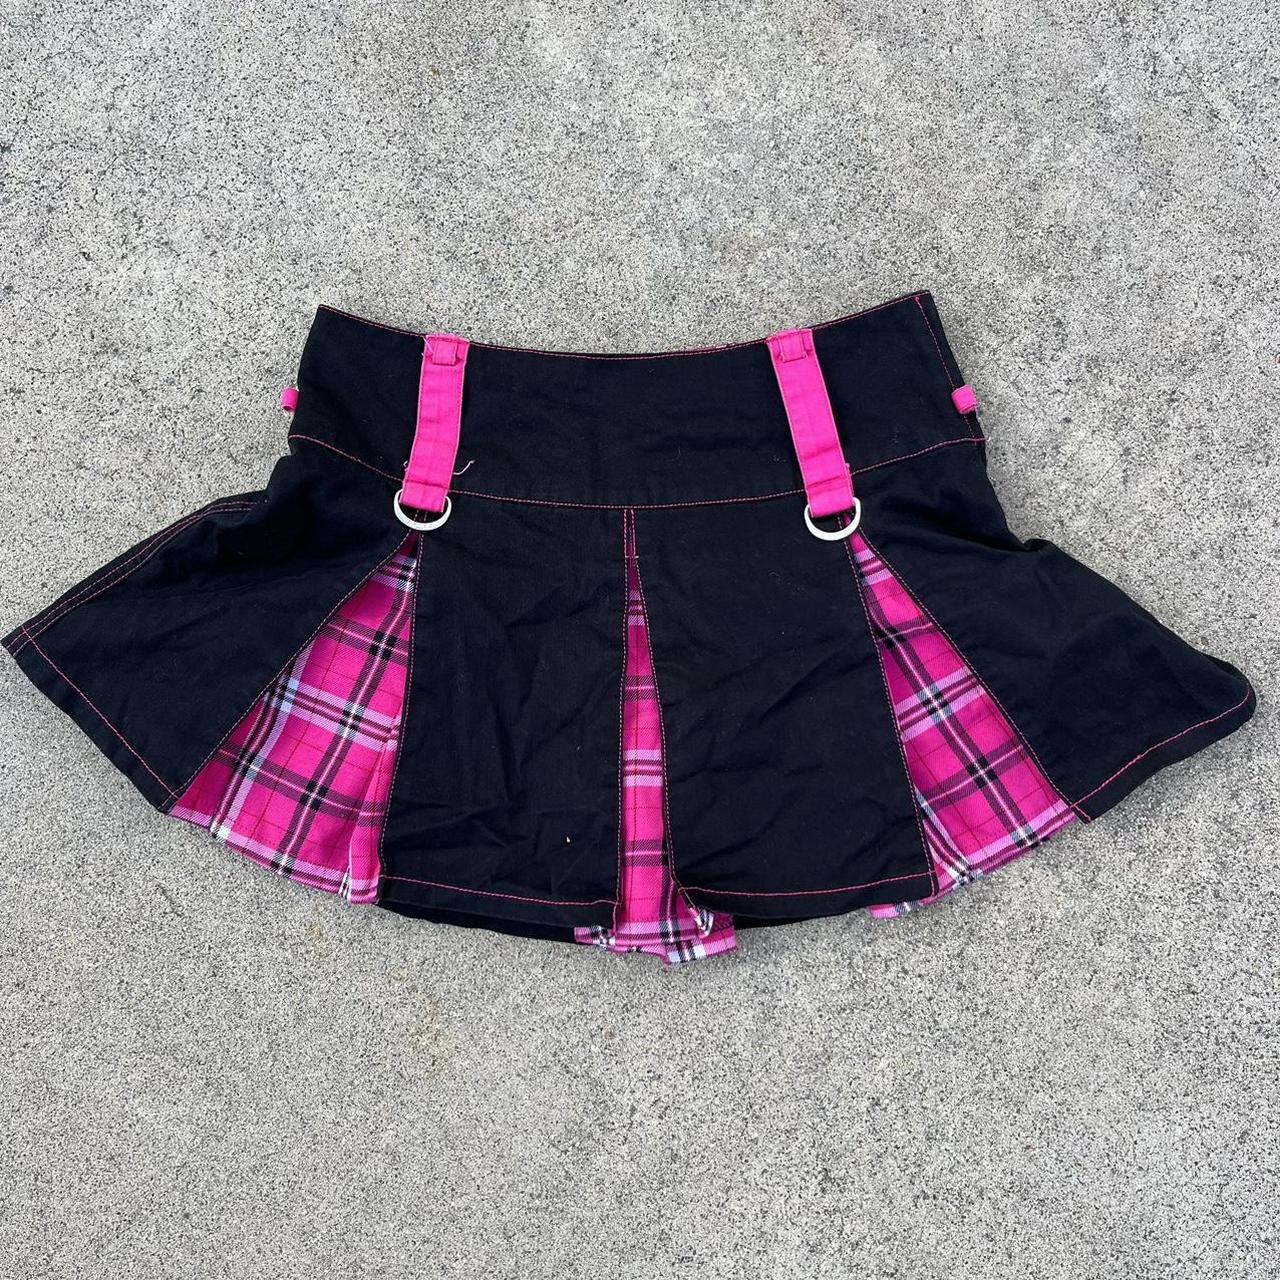 Vintage 90s / Y2K TRIPP nyc mini skirt. This black...